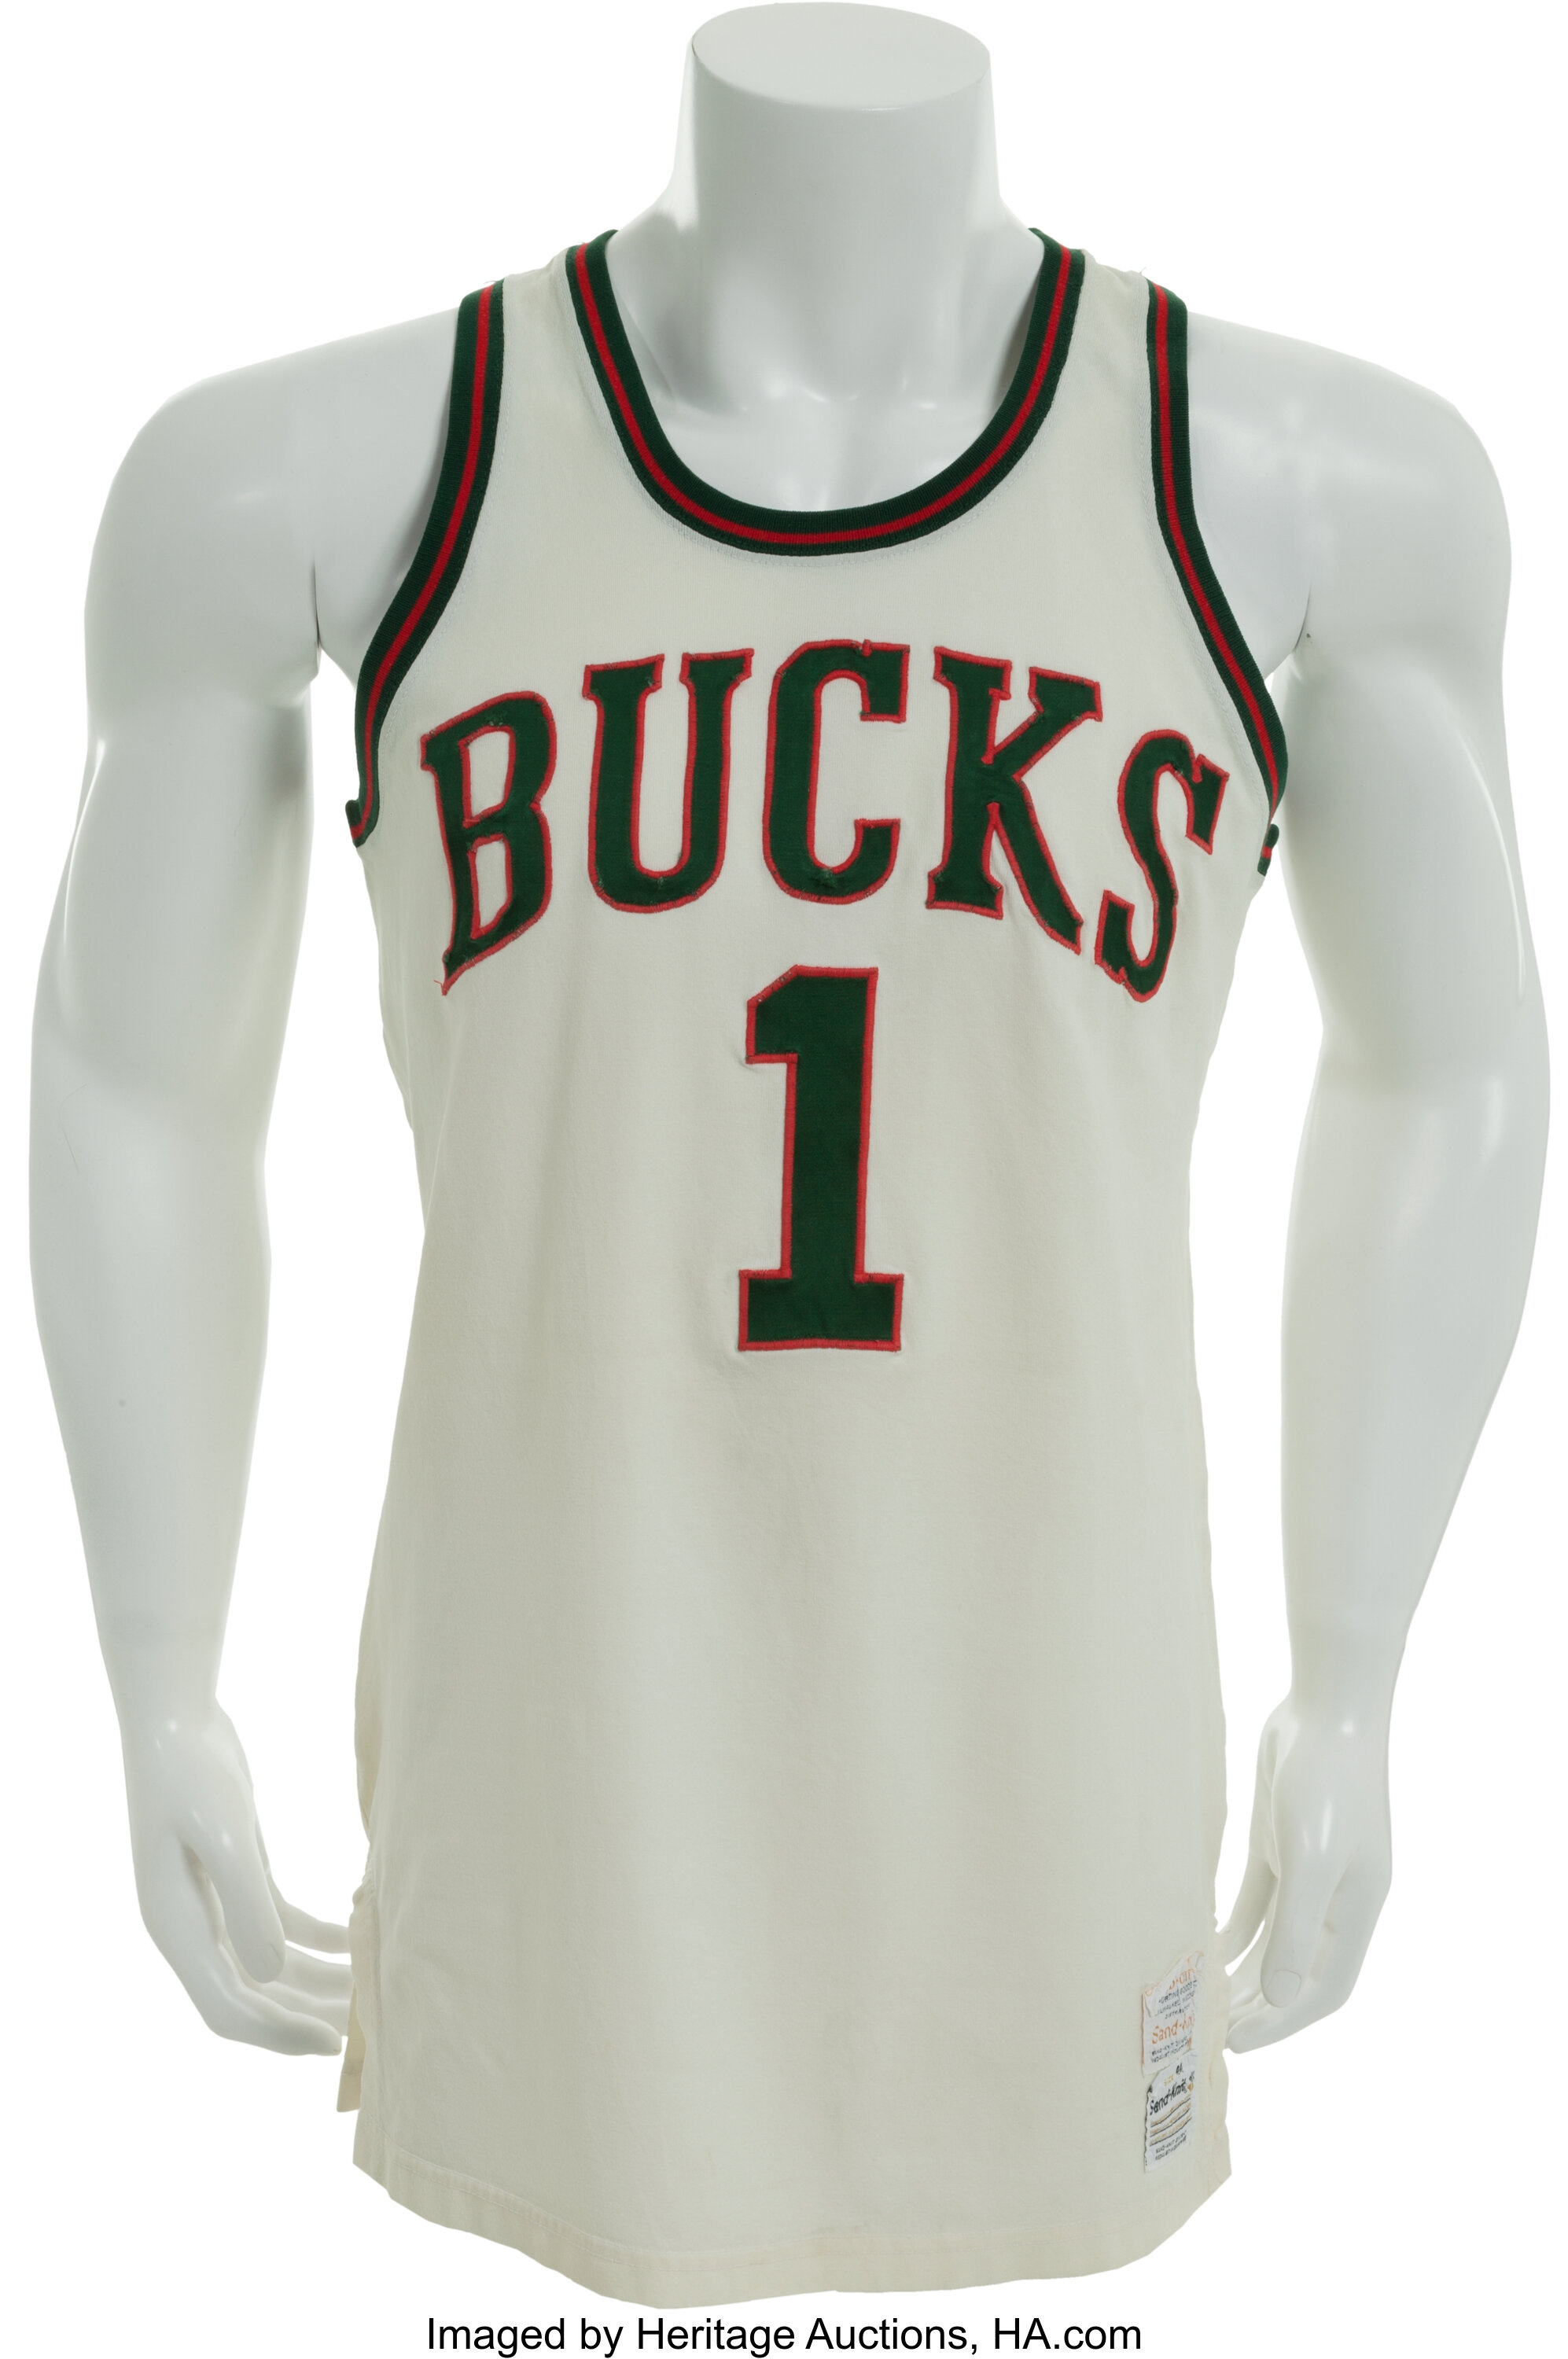 Milwaukee Bucks on X: The uniform features the 1971 home wordmark